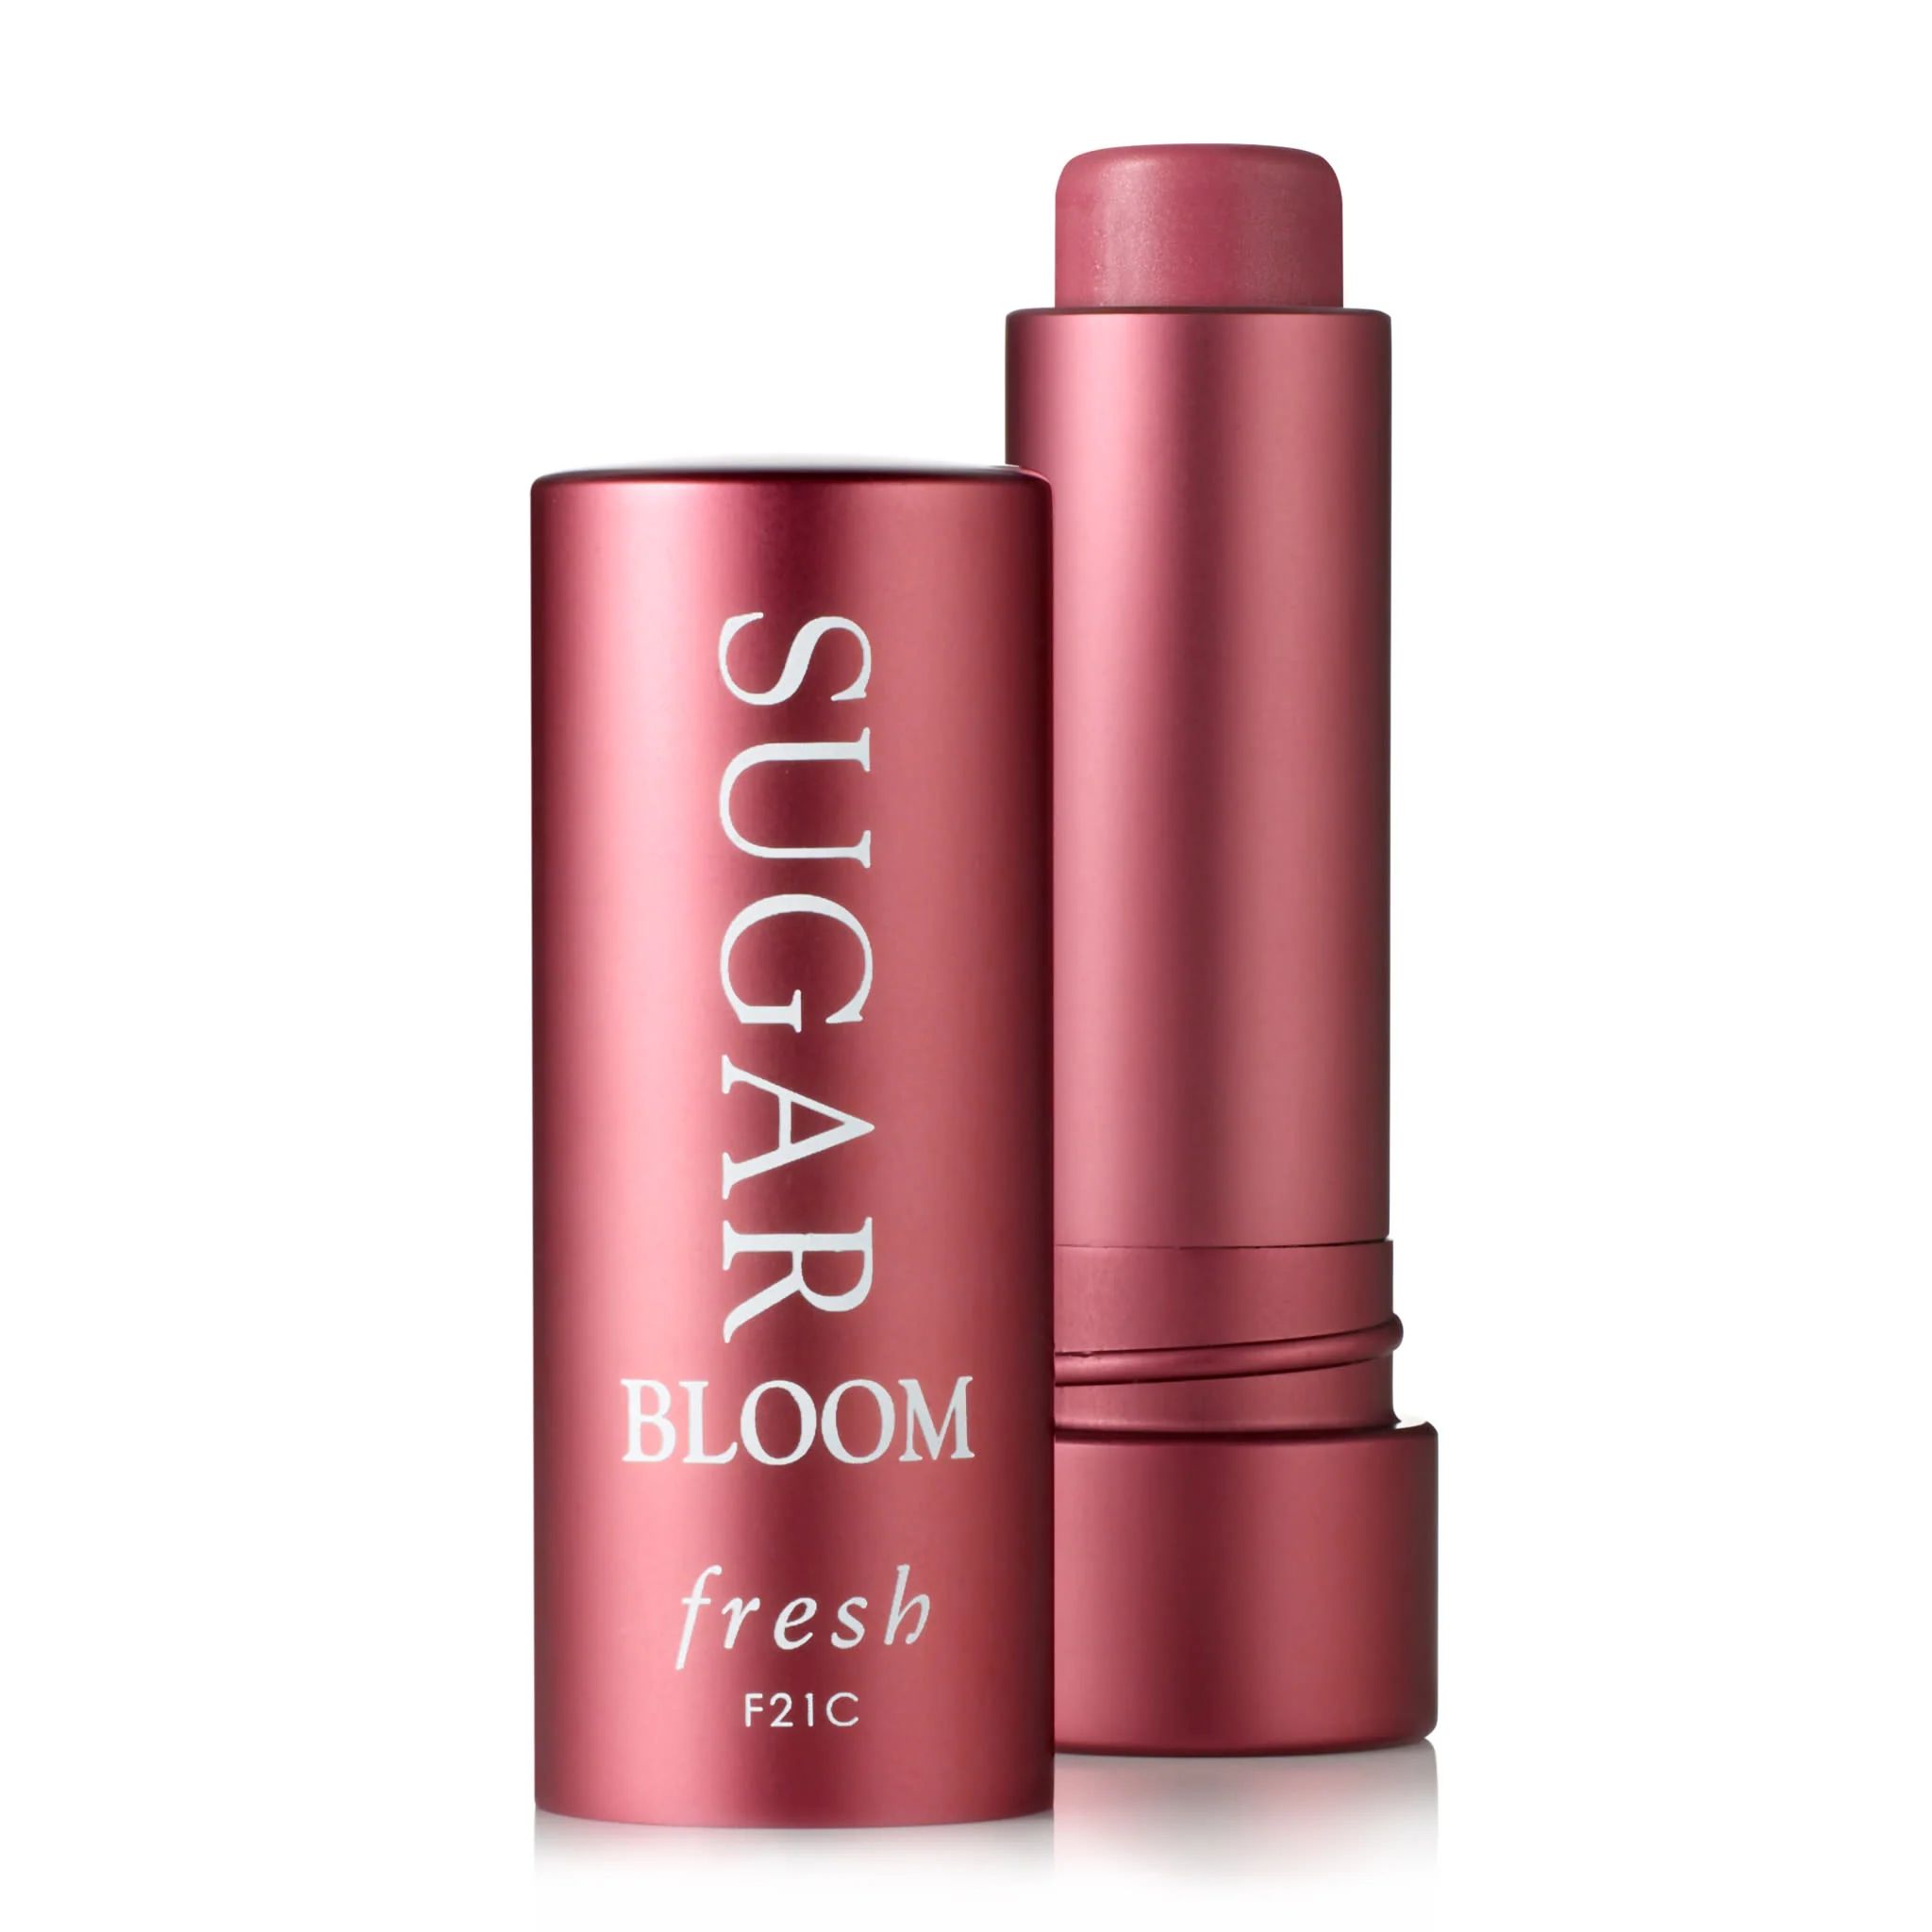 Sugar Bloom Tinted Lip Treatment Sunscreen SPF 15 | Bluemercury, Inc.